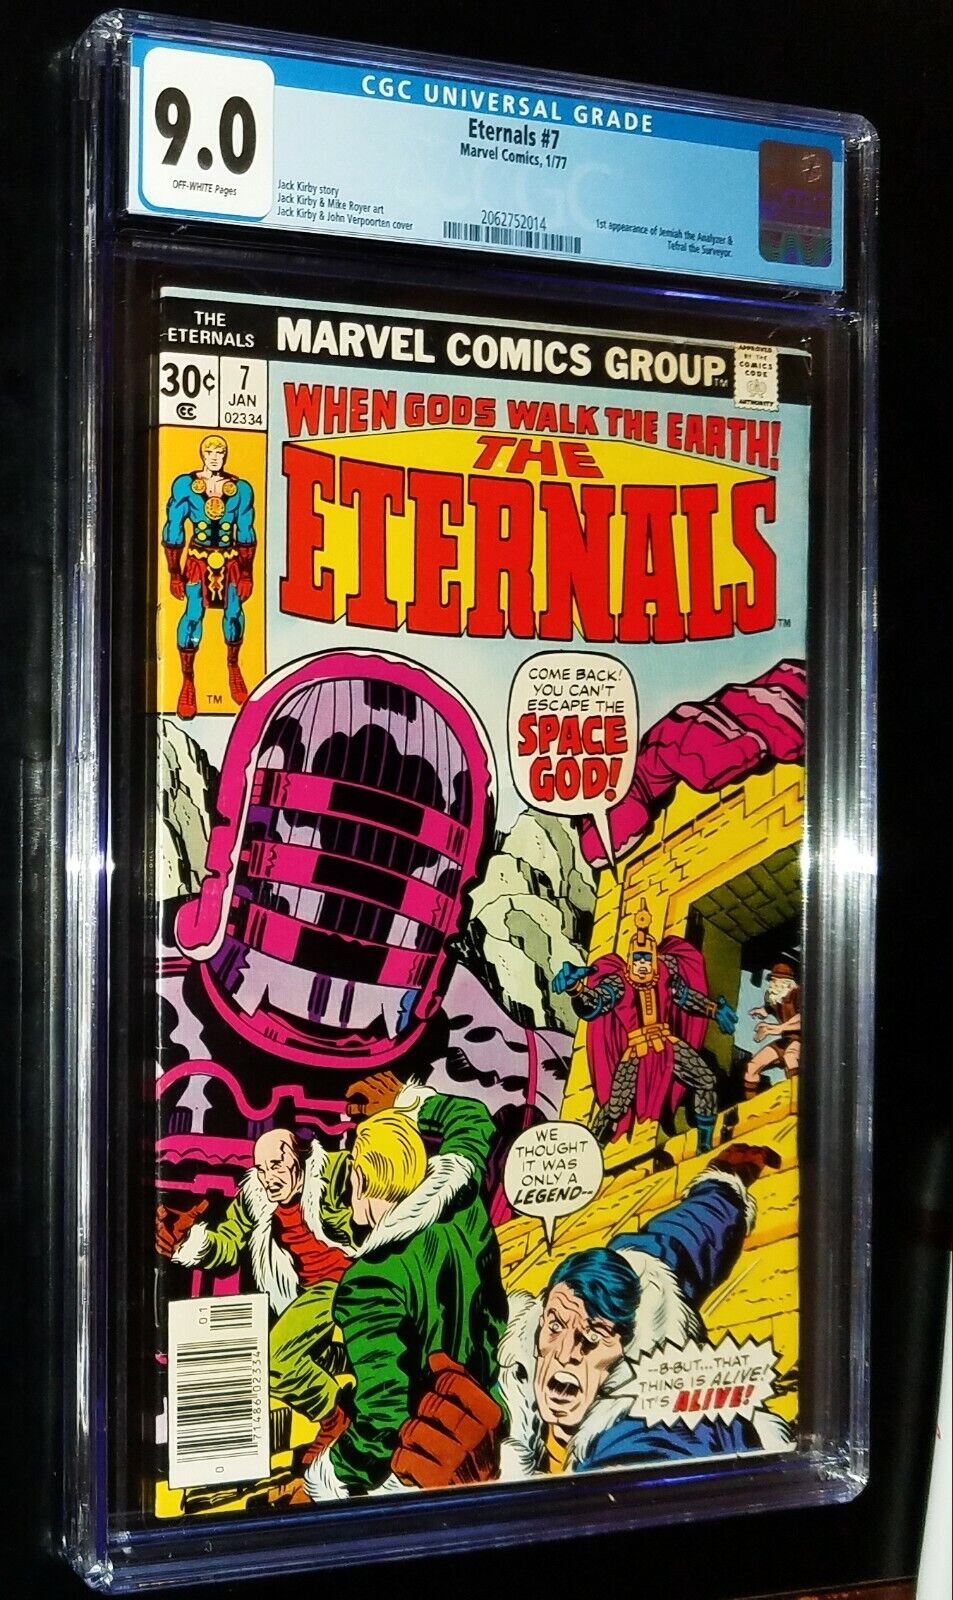 CGC THE ETERNALS #7 1977 Marvel Comics CGC 9.0 Very Fine/Near Mint